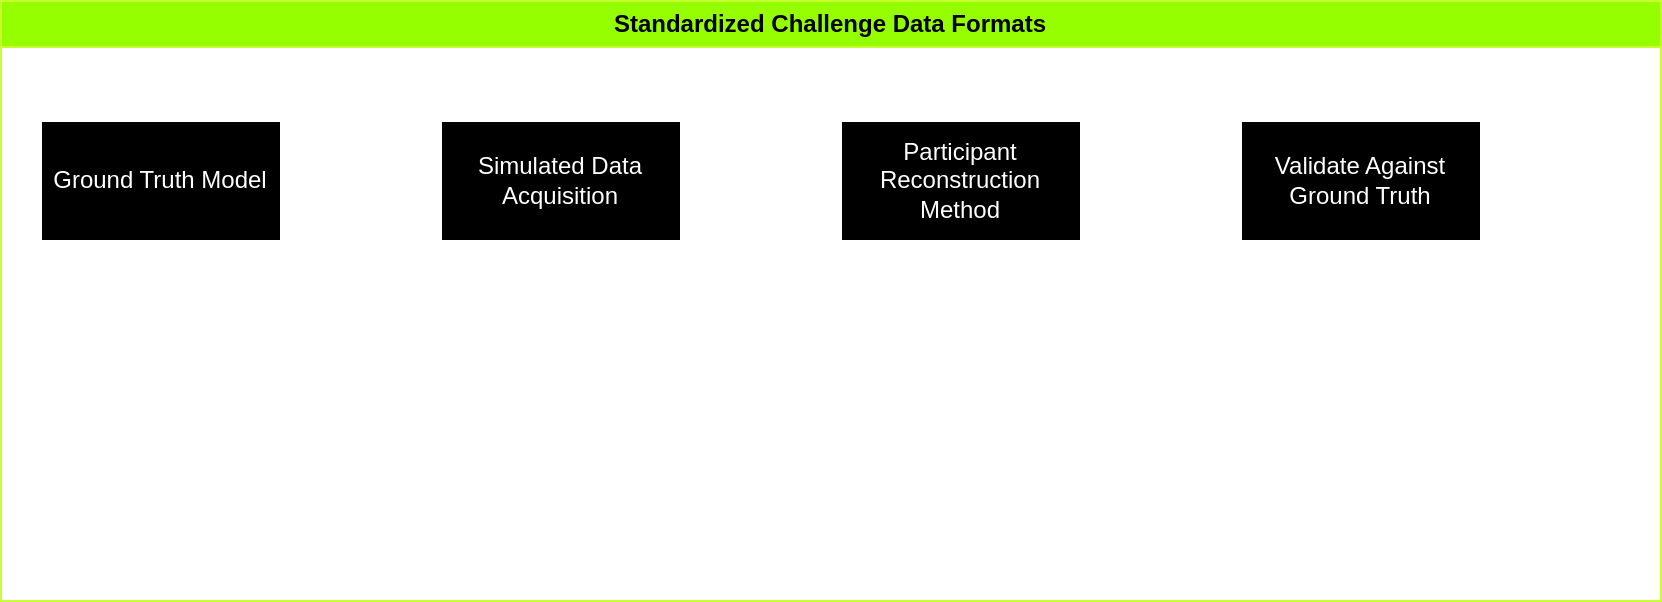 Standardized Challenge Data Formats